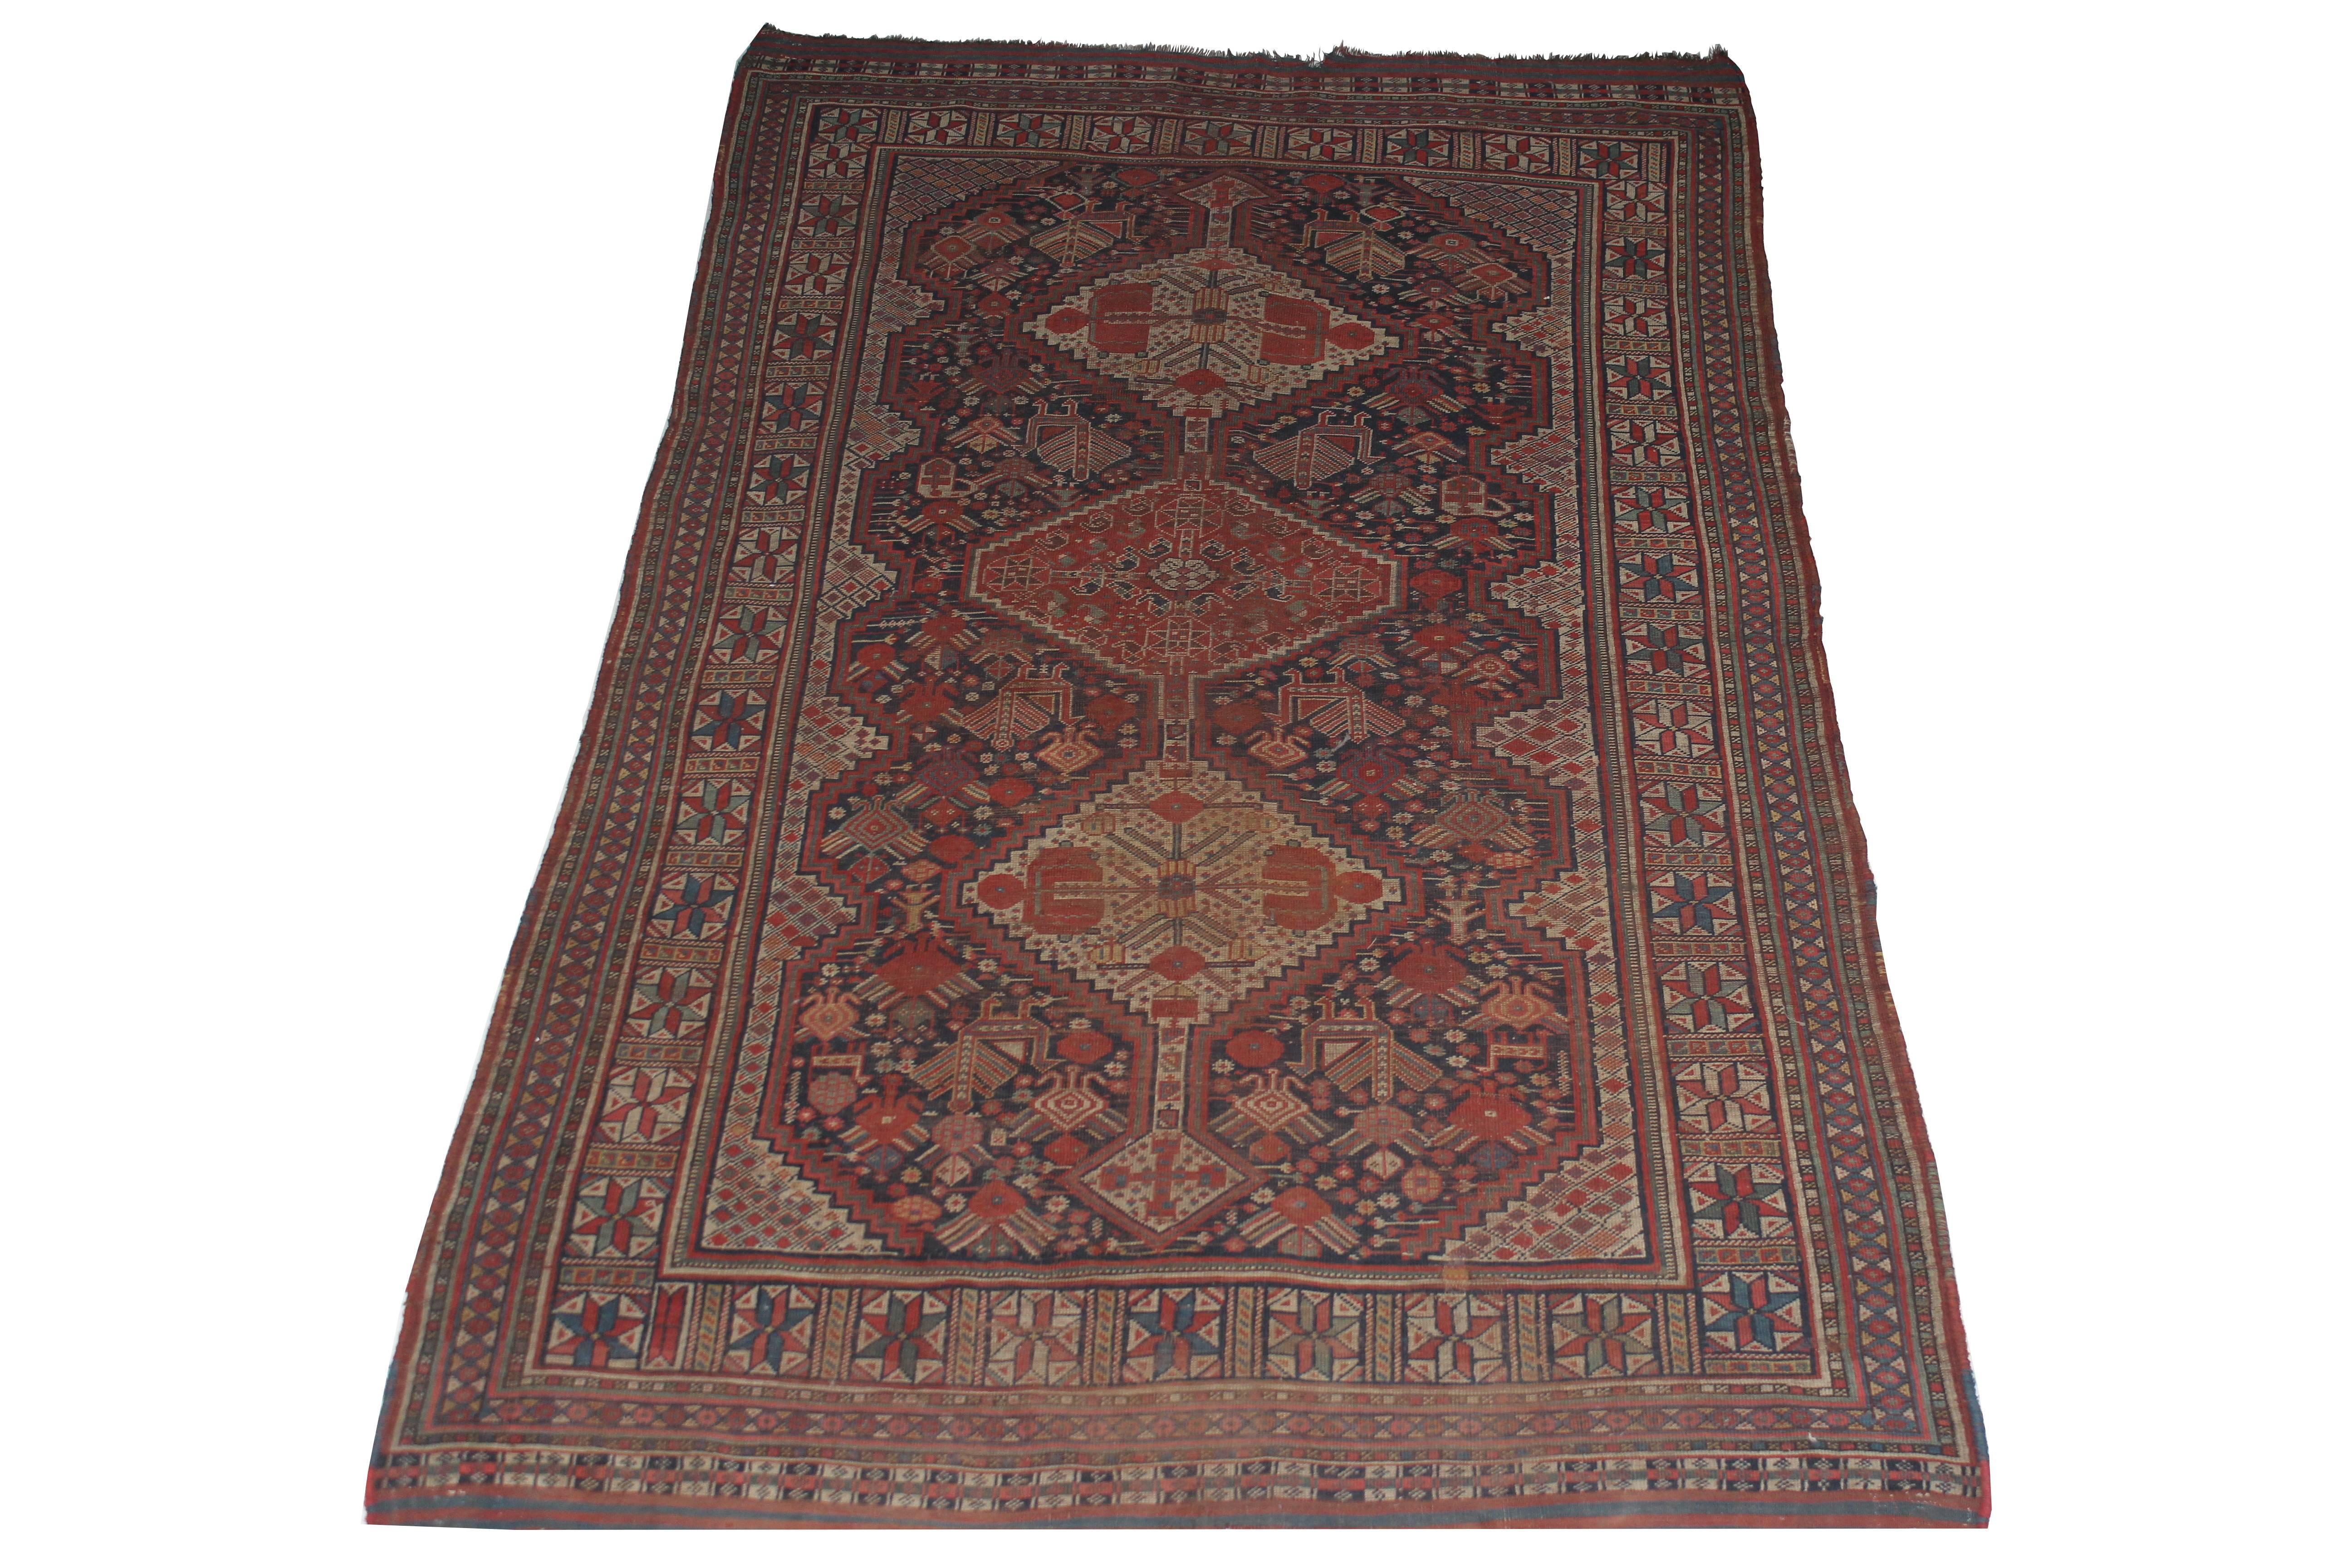 1910 handmade Persian Shiraz rug. Colors are natural earth tones .